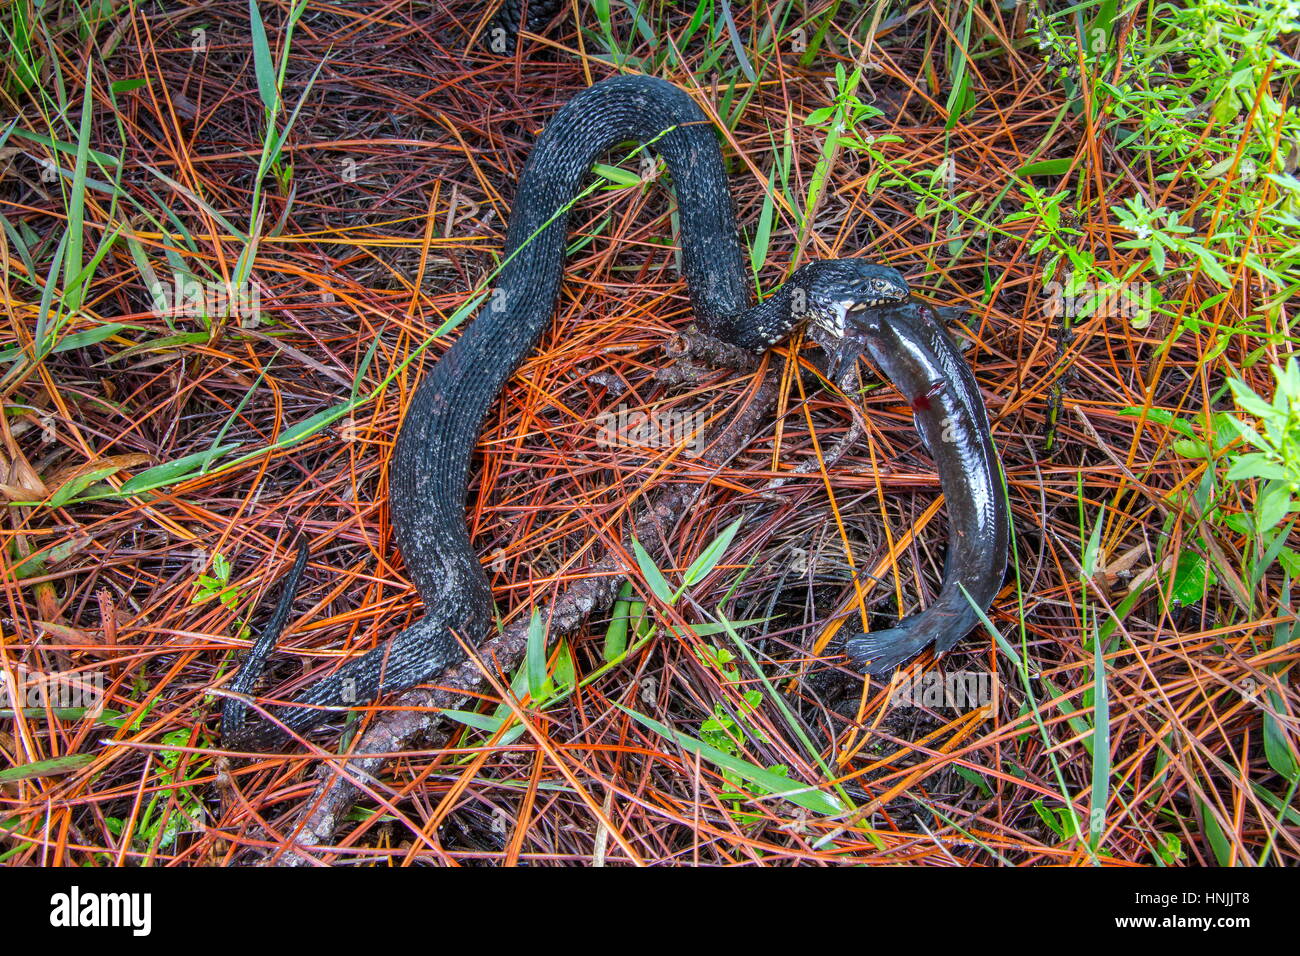 A Florida water snake, Nerodia faciata, swallowing a walking catfish, Clarius batrachus. Stock Photo